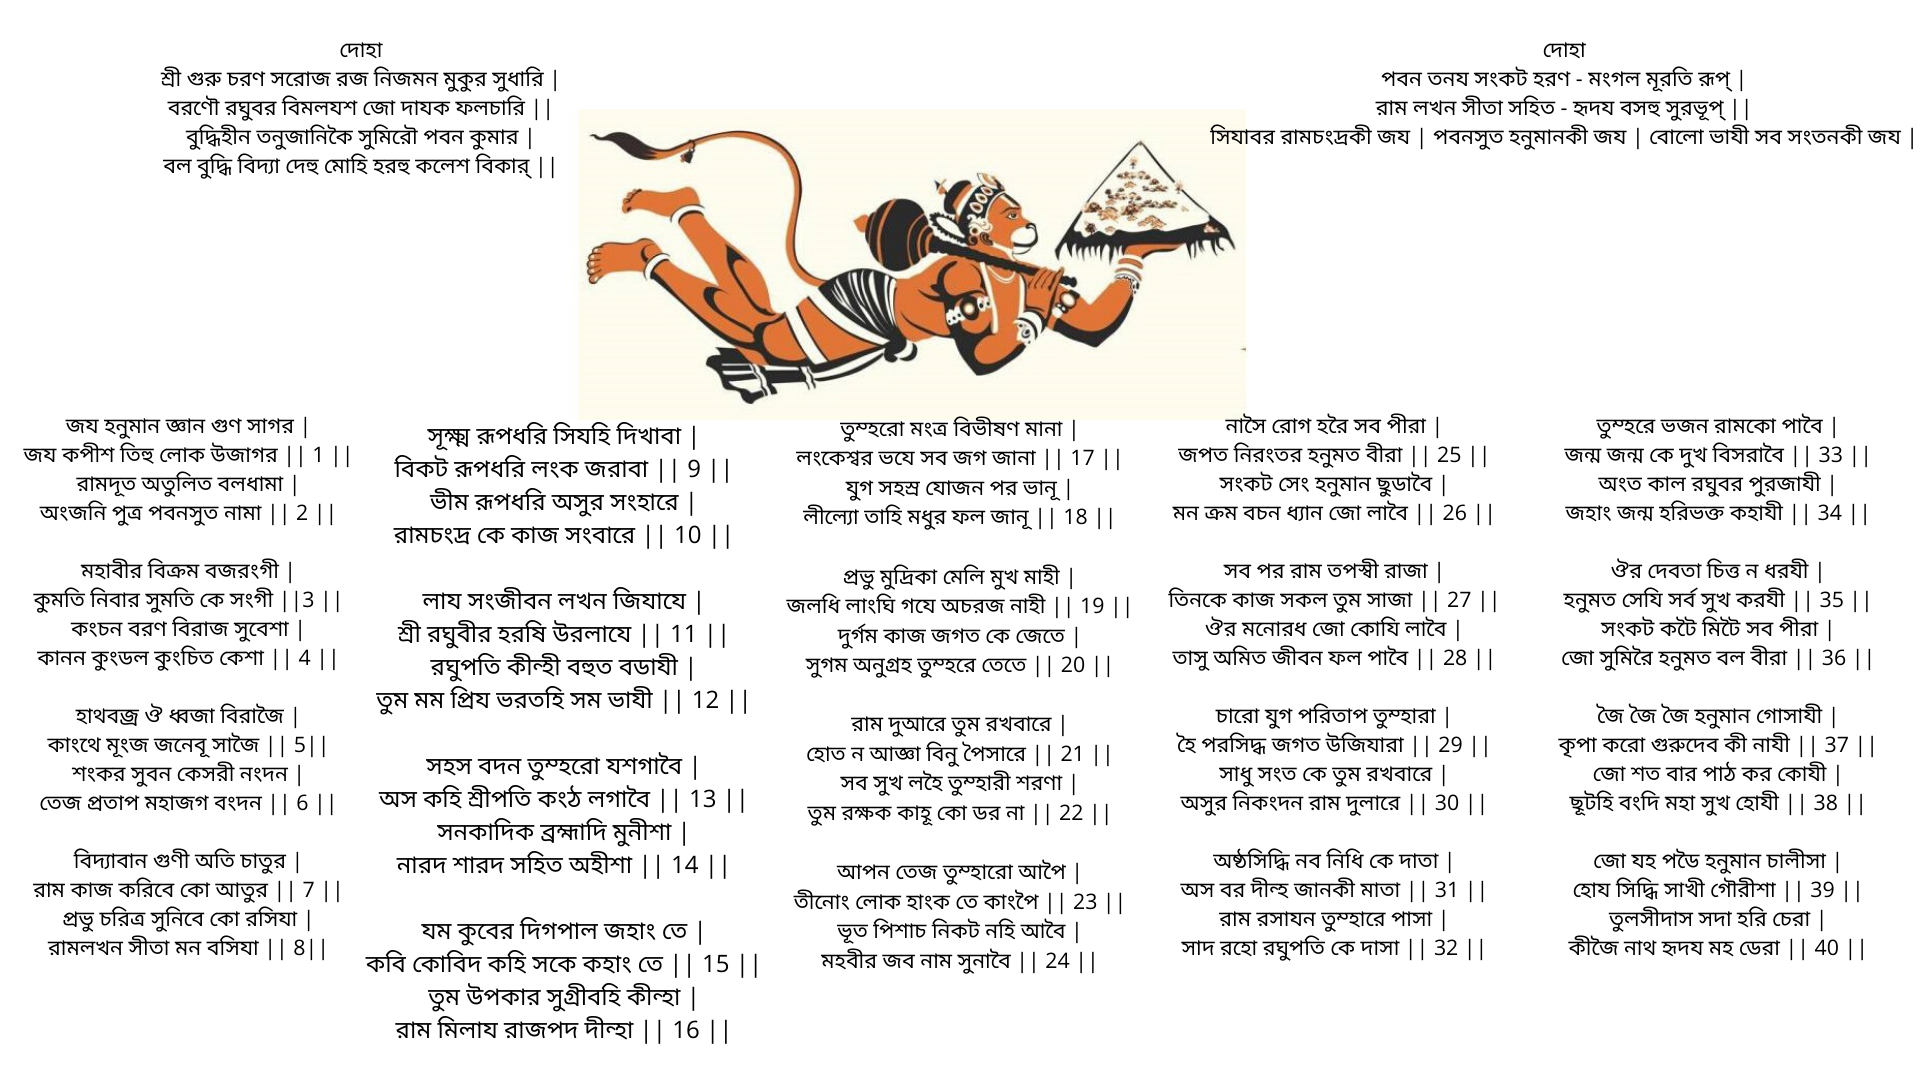 Hanuman Chalisa Bengali PDF